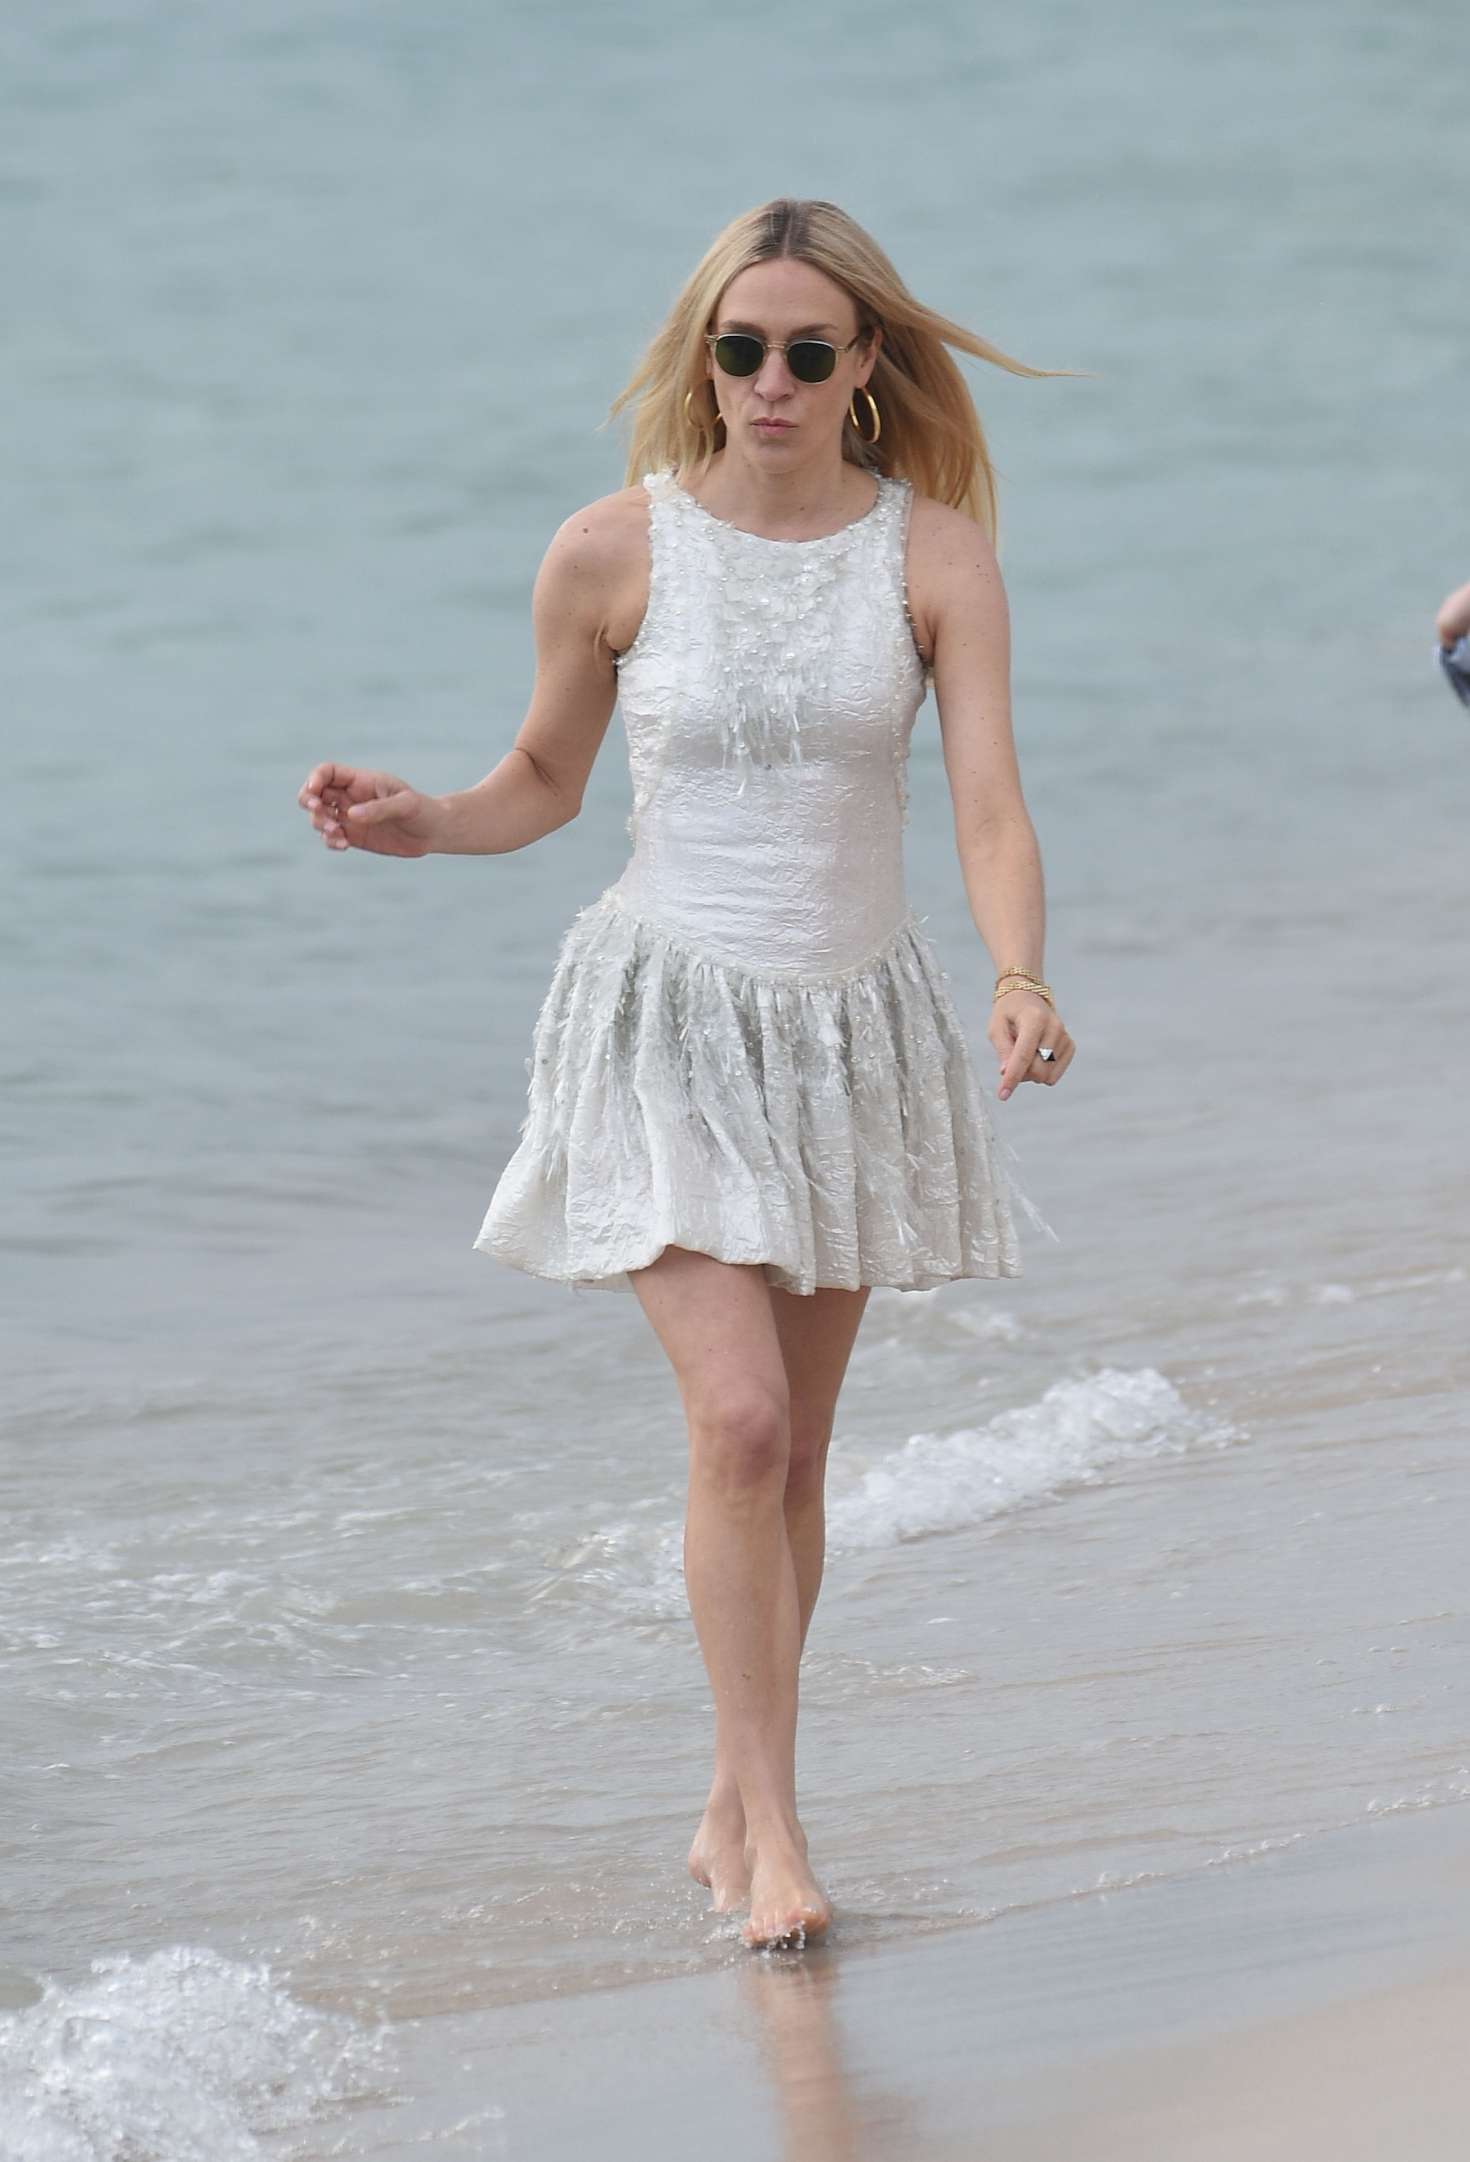 Chloe Sevigny in White Mini Dress on the beach in Cannes